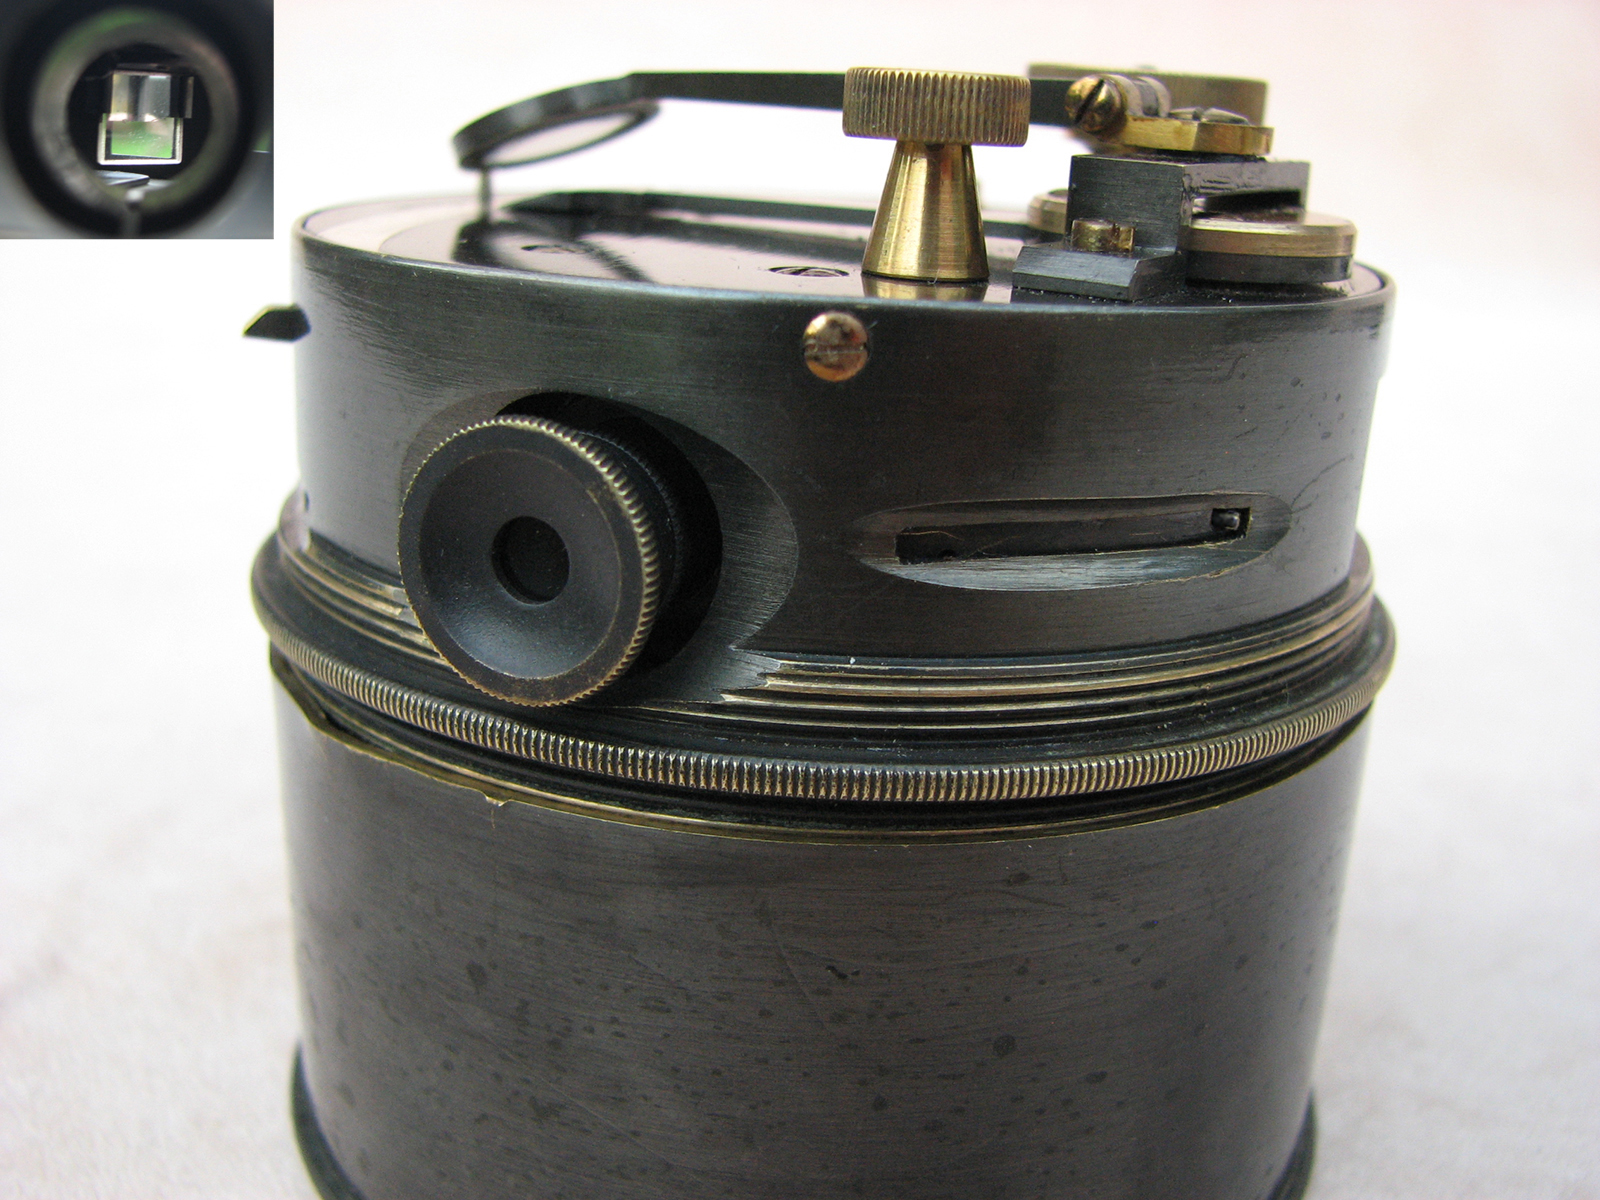 J H Steward WW1 era pocket box sextant with extending telescope